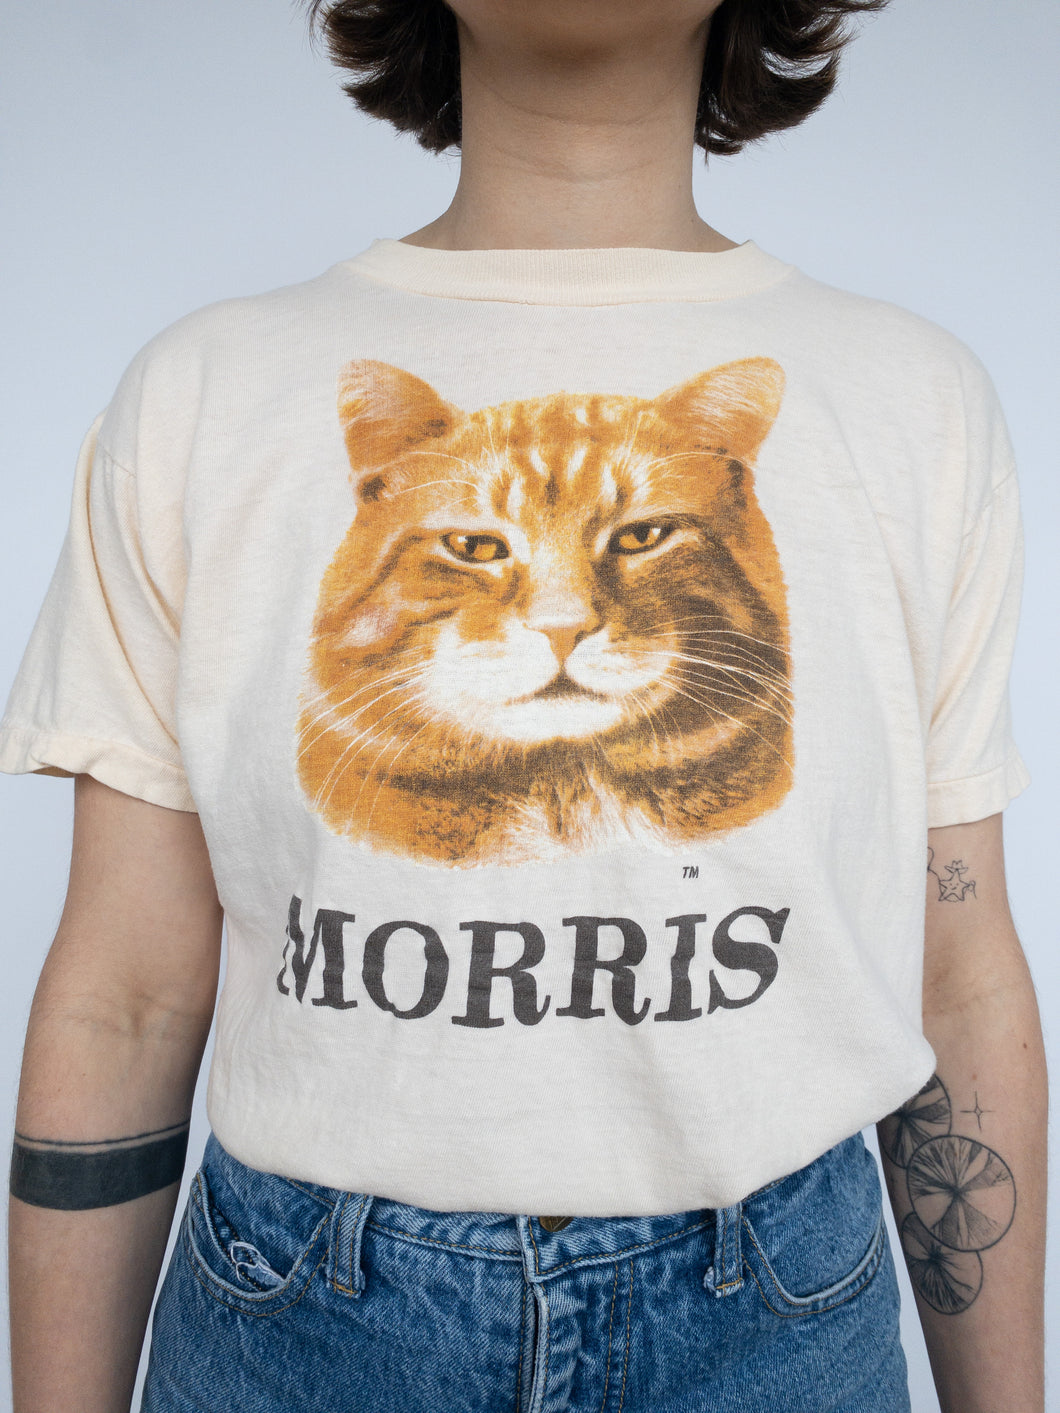 Morris the cat tee (Google him!)